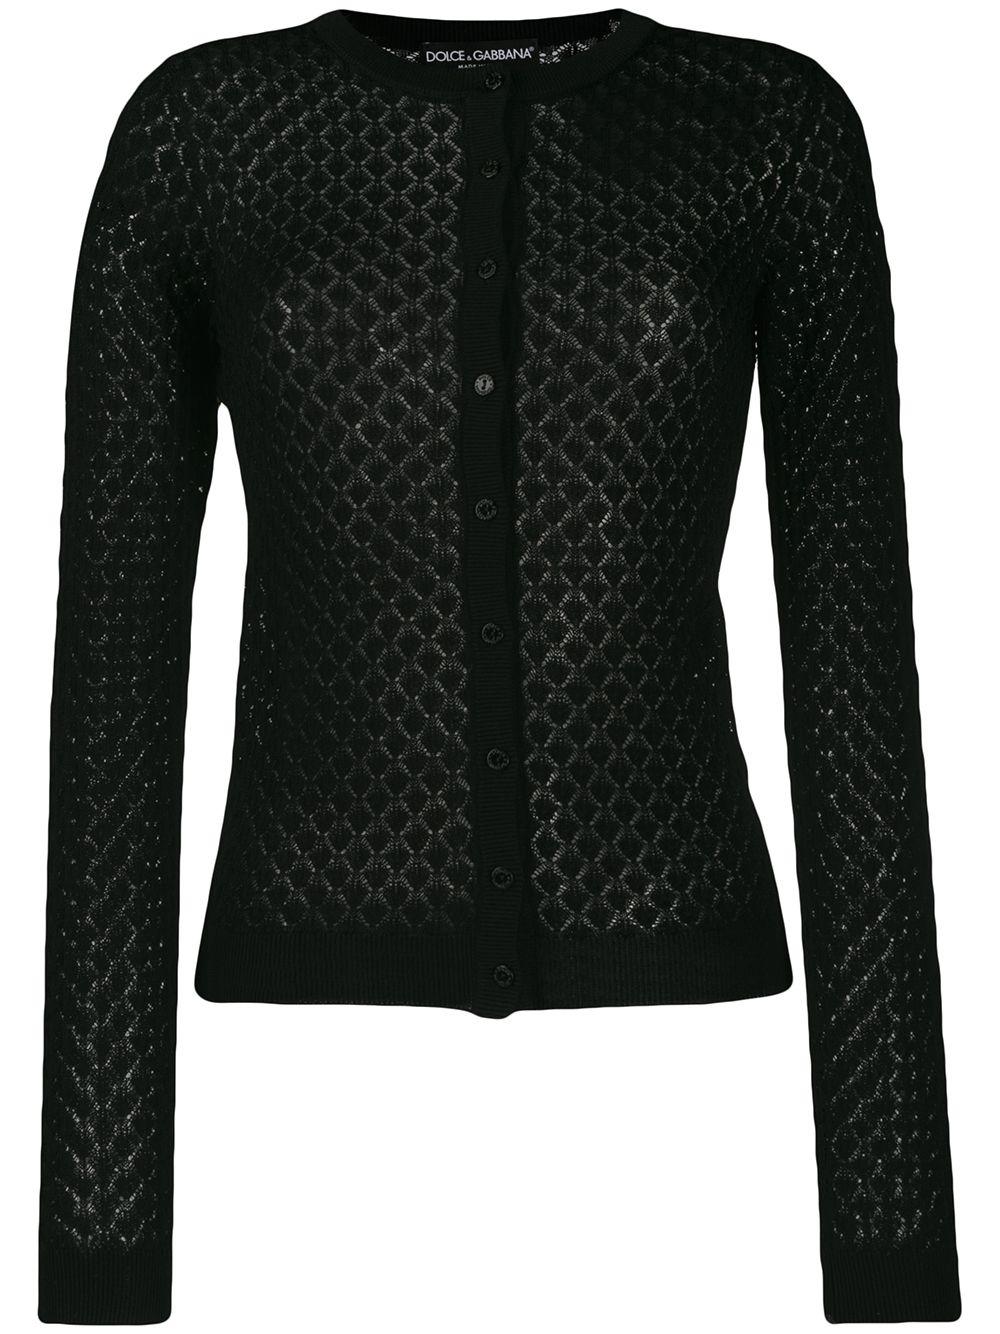 Dolce & Gabbana Synthetic Crochet Knit Cardigan in Black - Lyst